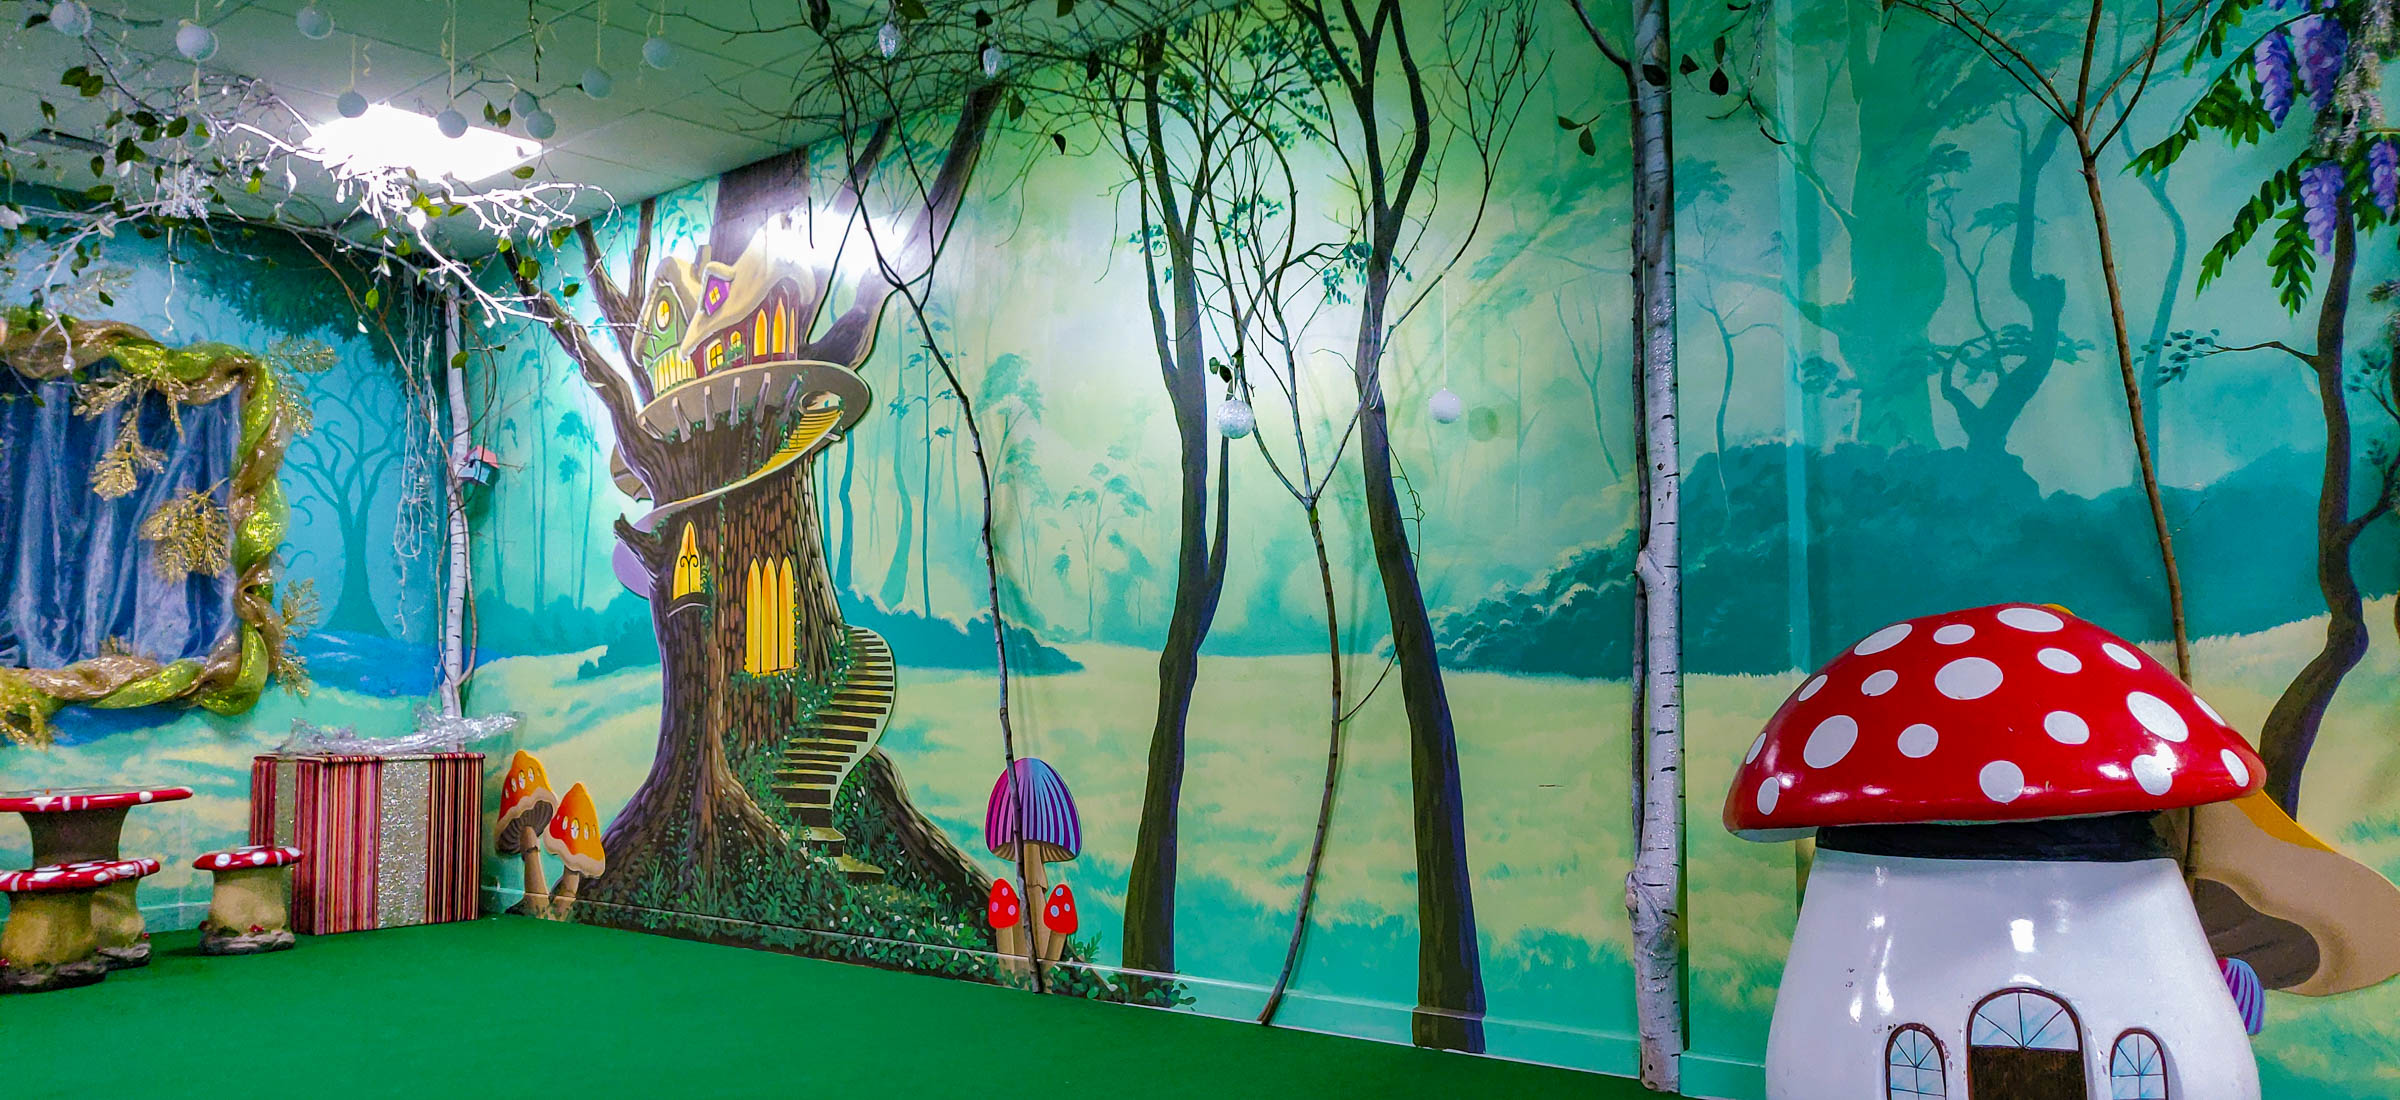 Magic Forest Party Room at the Riverside Hub, Northampton, original layout artwork